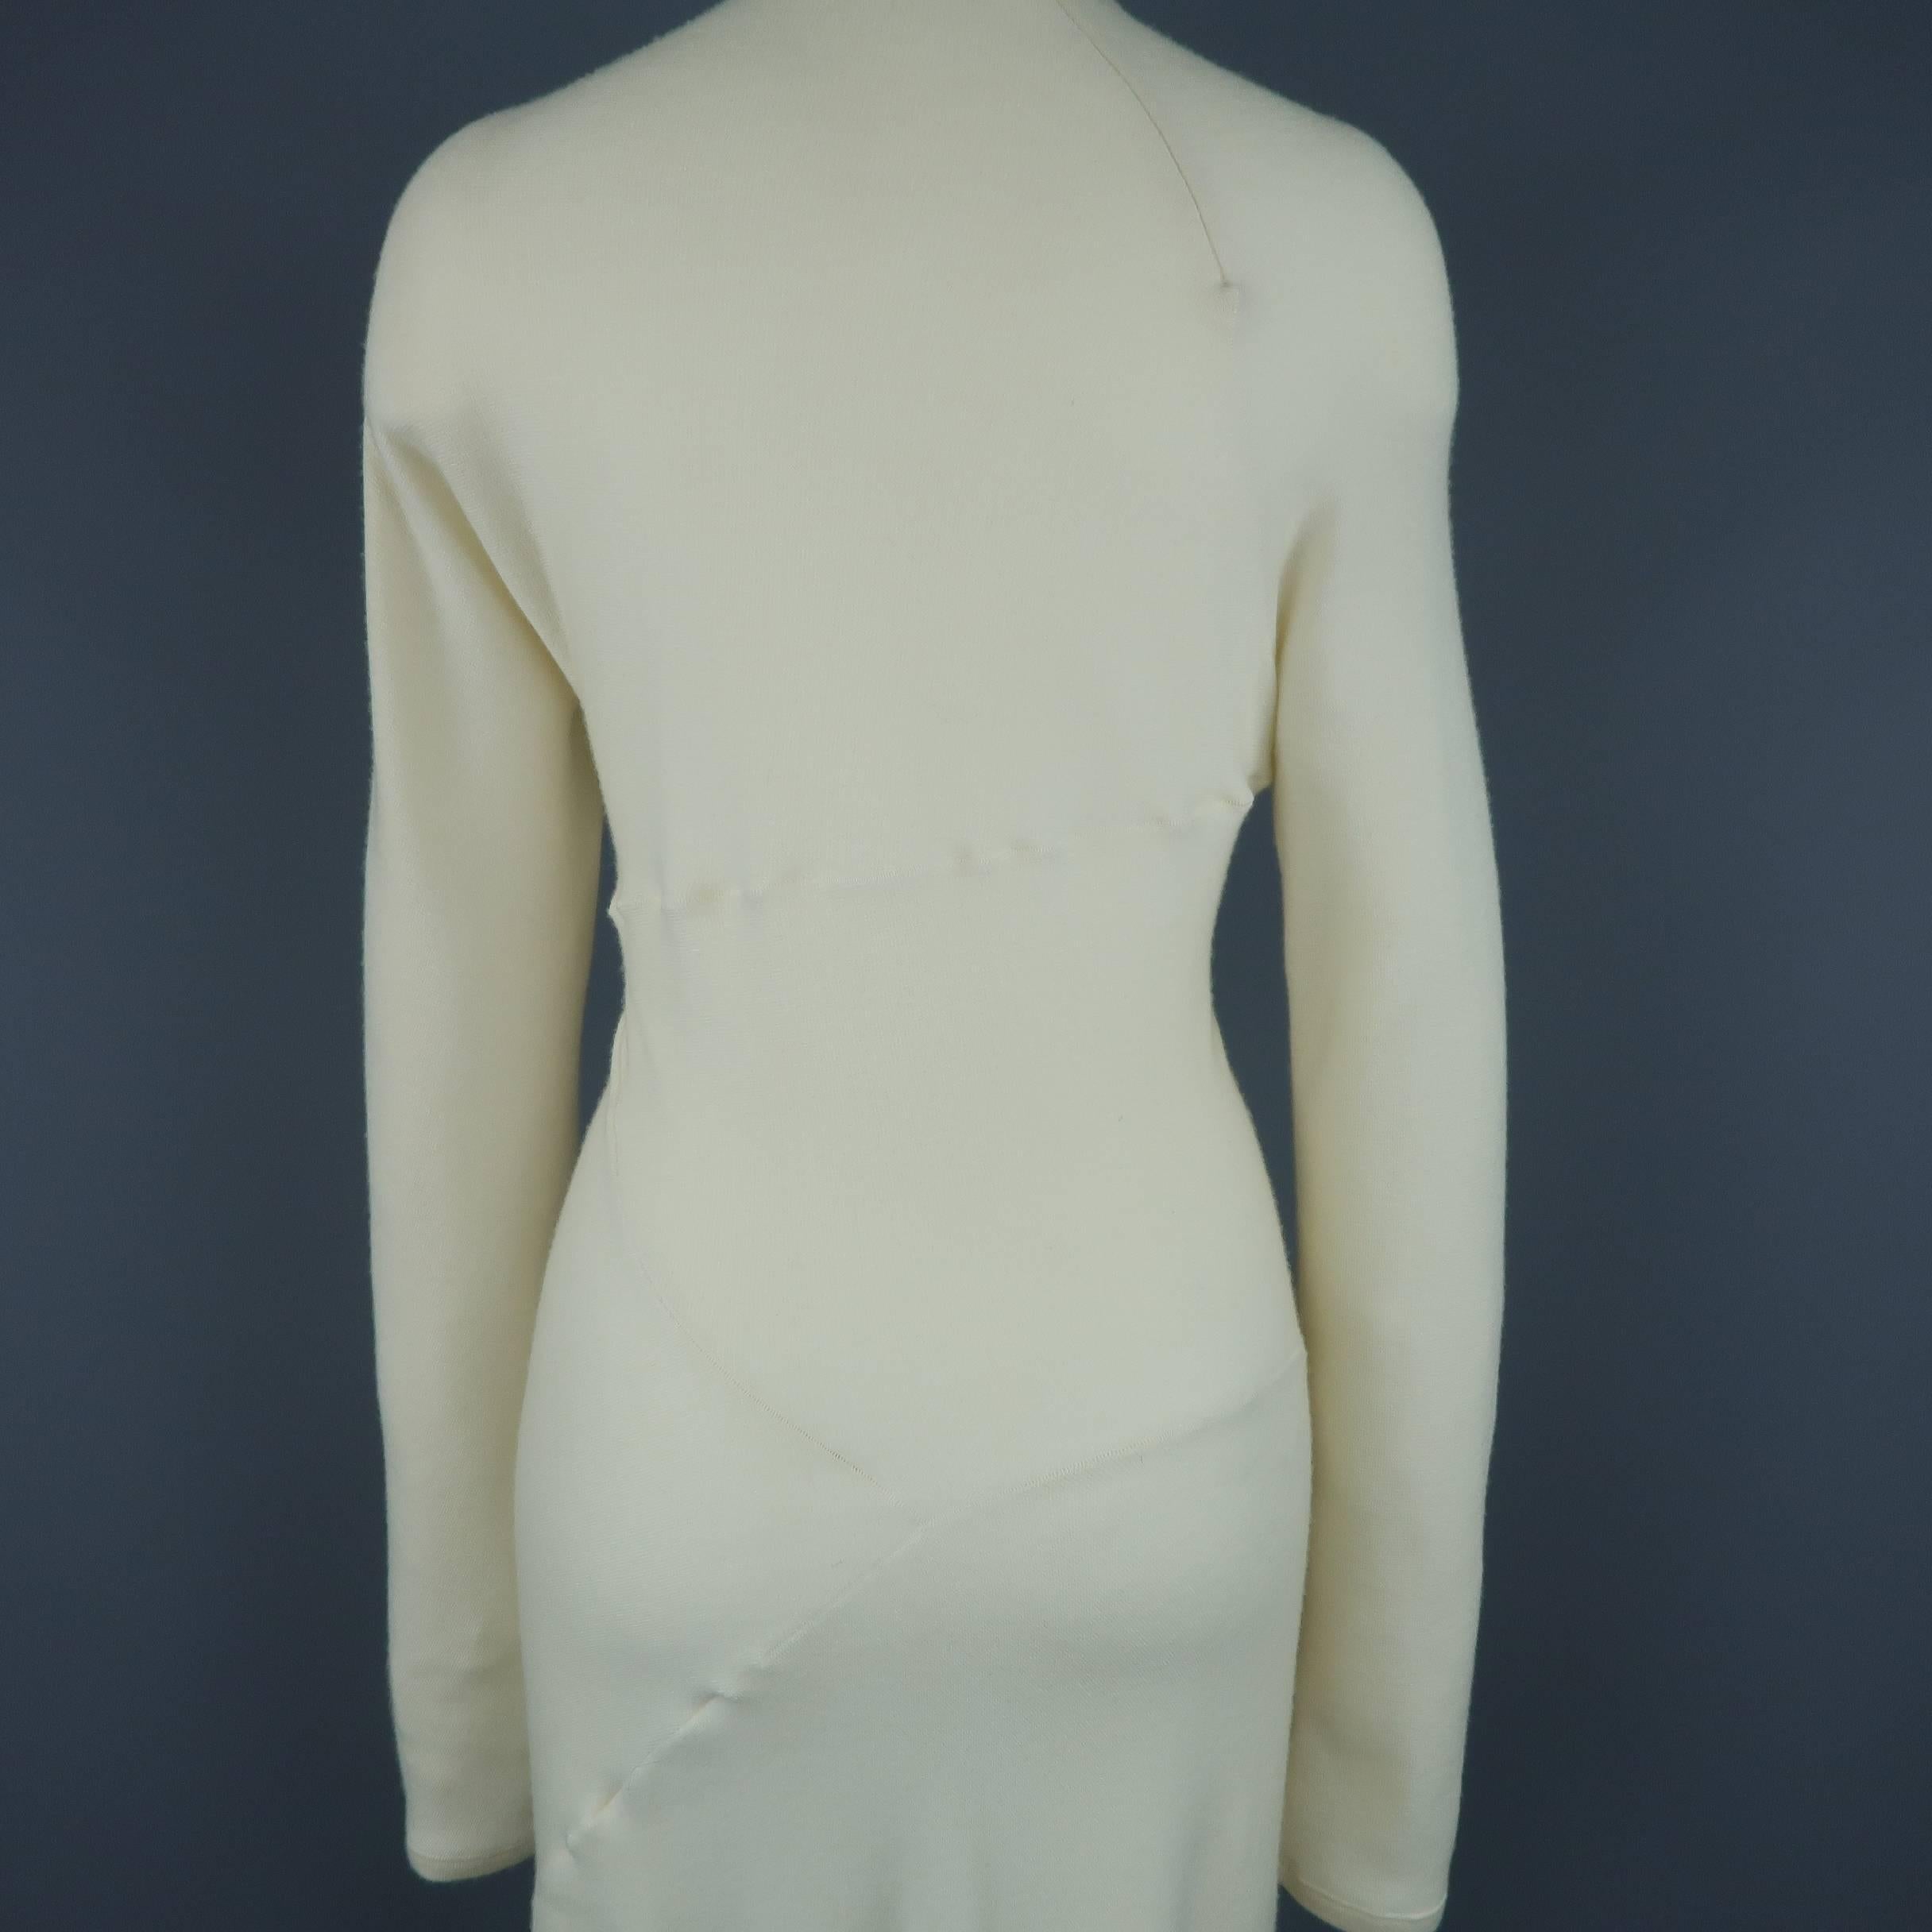 Women's DONNA KARAN Size M Cream Cashmere Turtleneck Sweater Dress